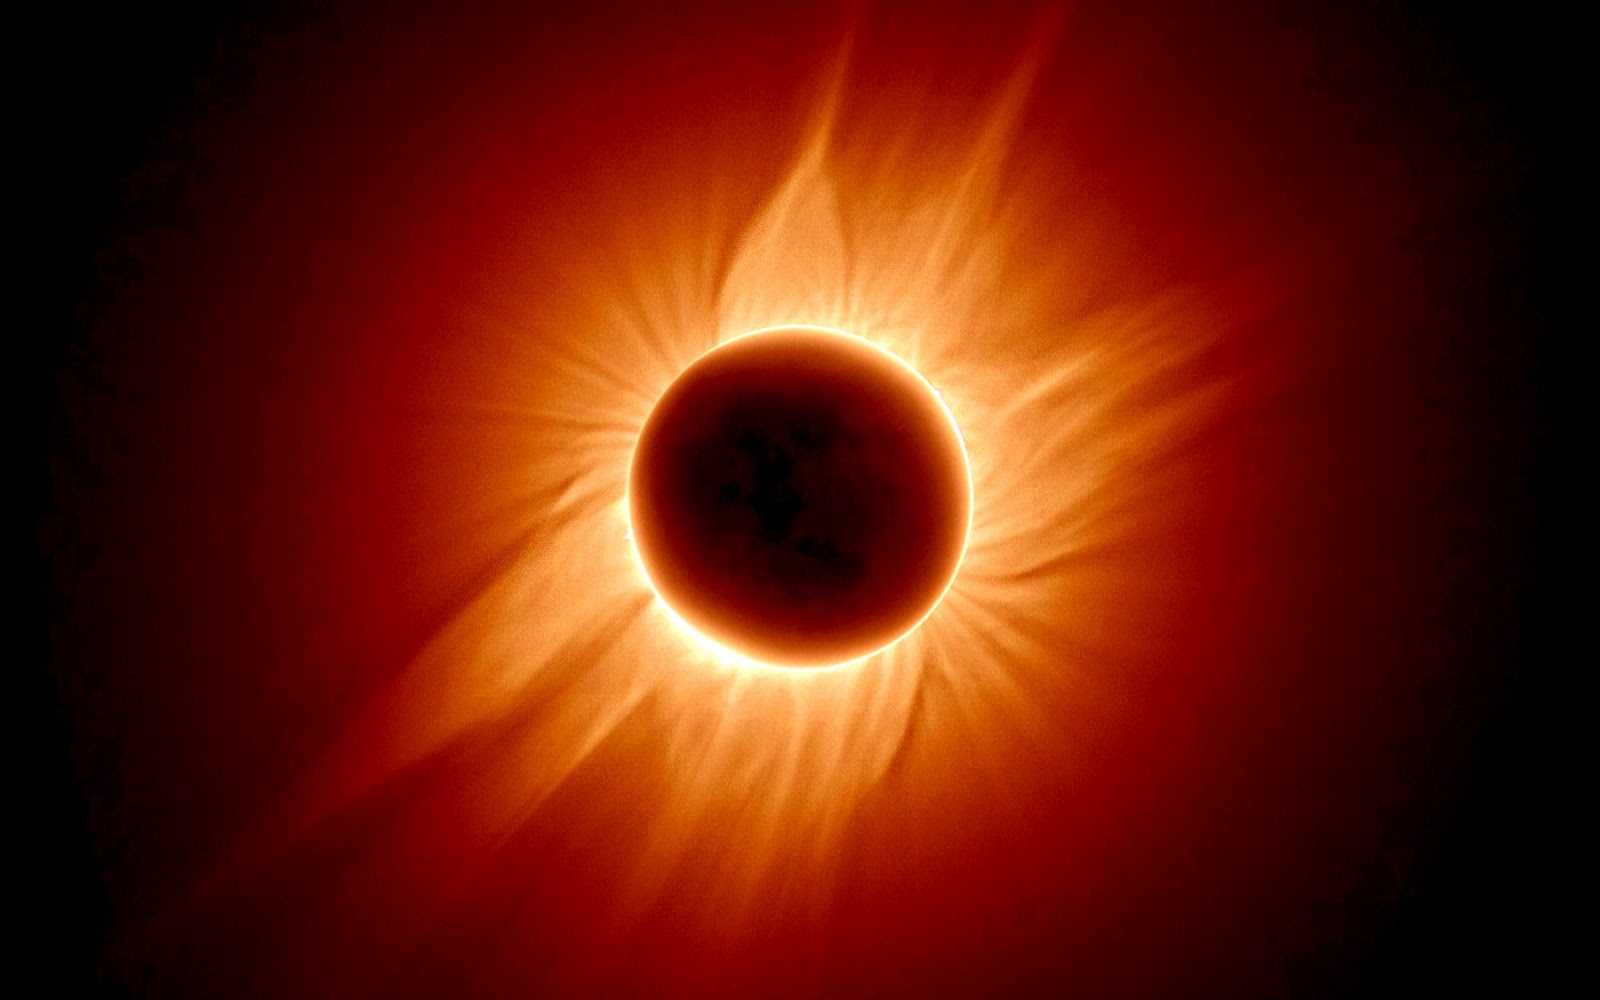 2 солнечная корона. Солнечное затмение корона. Солнечное затмение корона солнца. Солнечное затмение протуберанцы. Солнечное затмение (Solar Eclipse) томат.